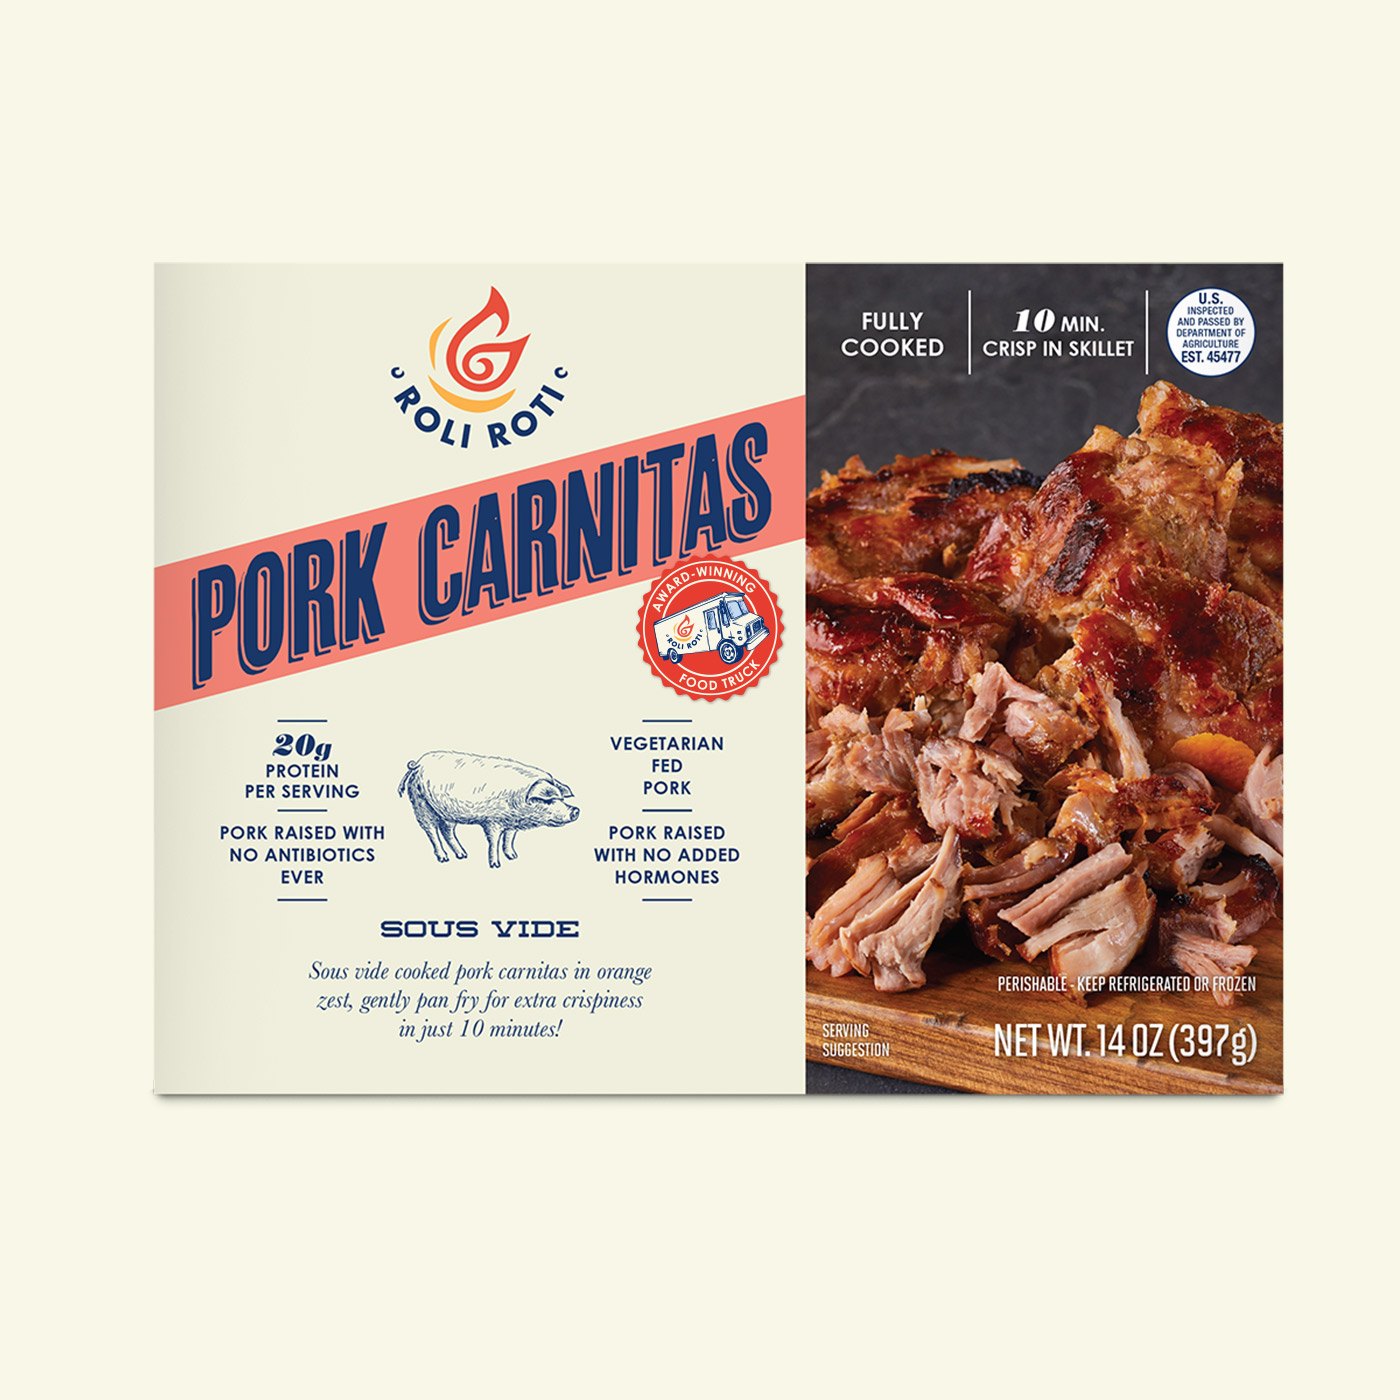 Roli Roti Pork Carnitas retail packaging featuring a rectangular cream box, pink flavor band, and pork carnitas photography.